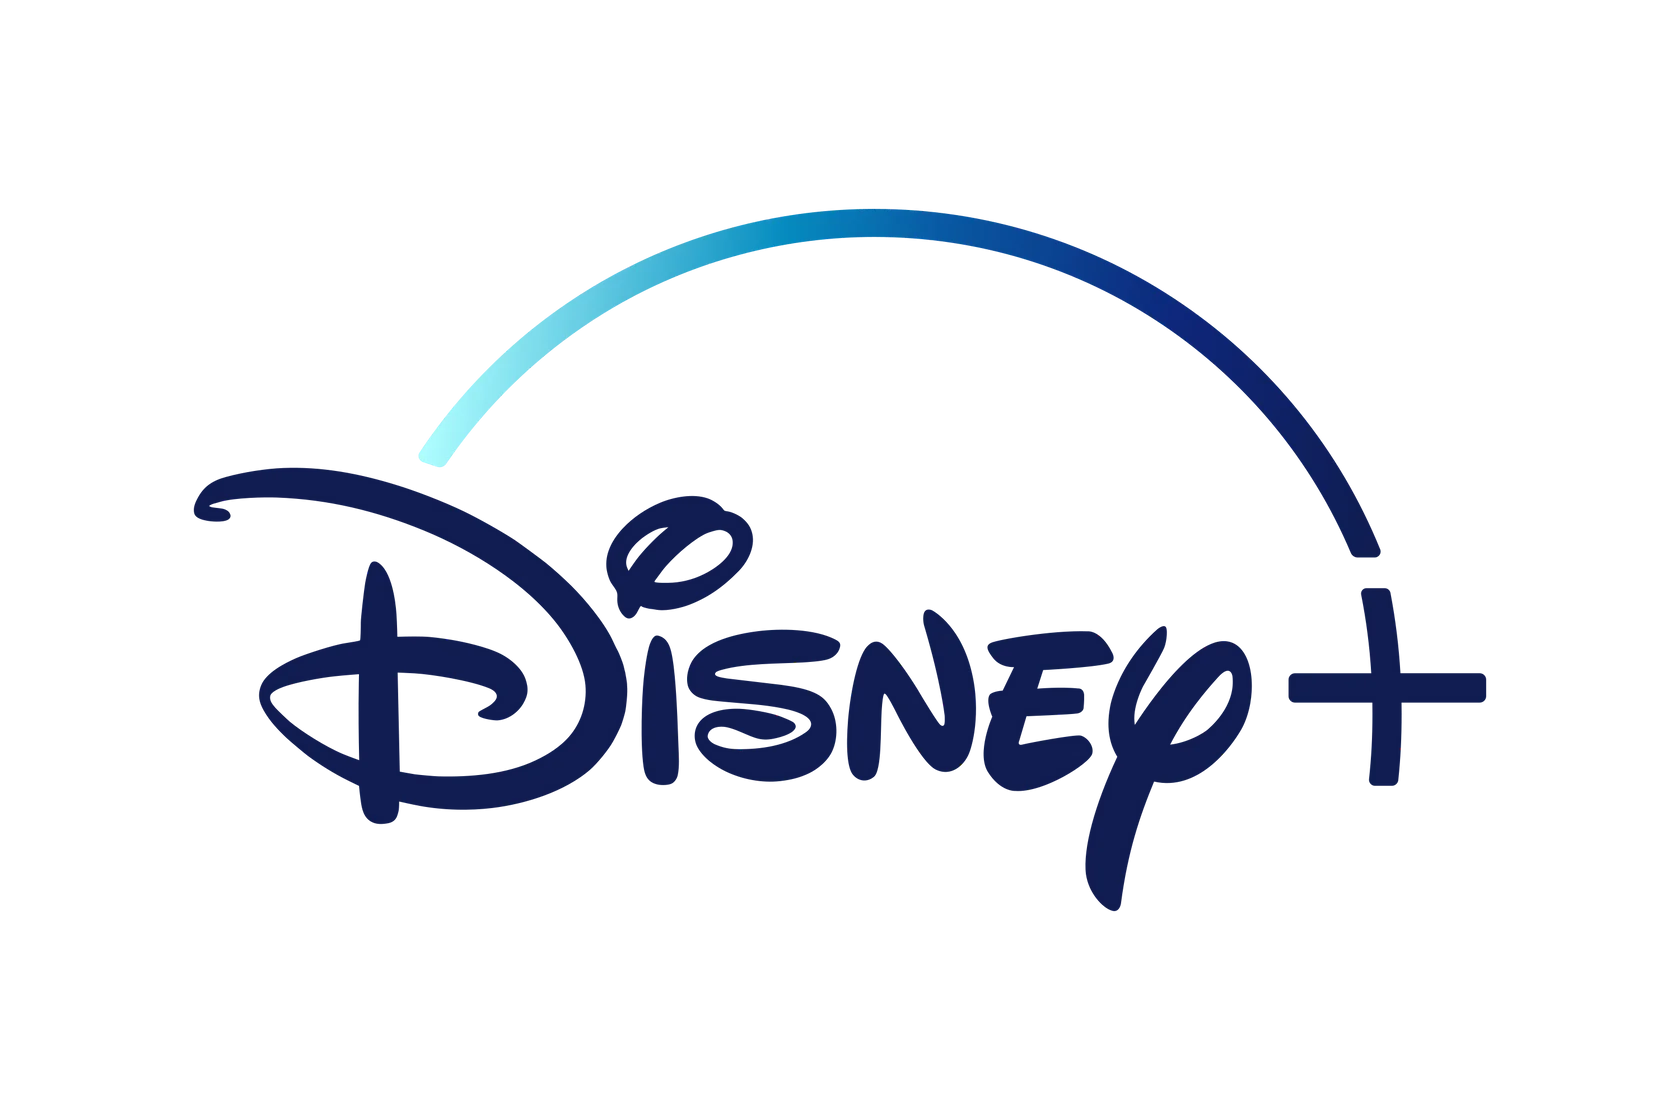 Disney plus logo 